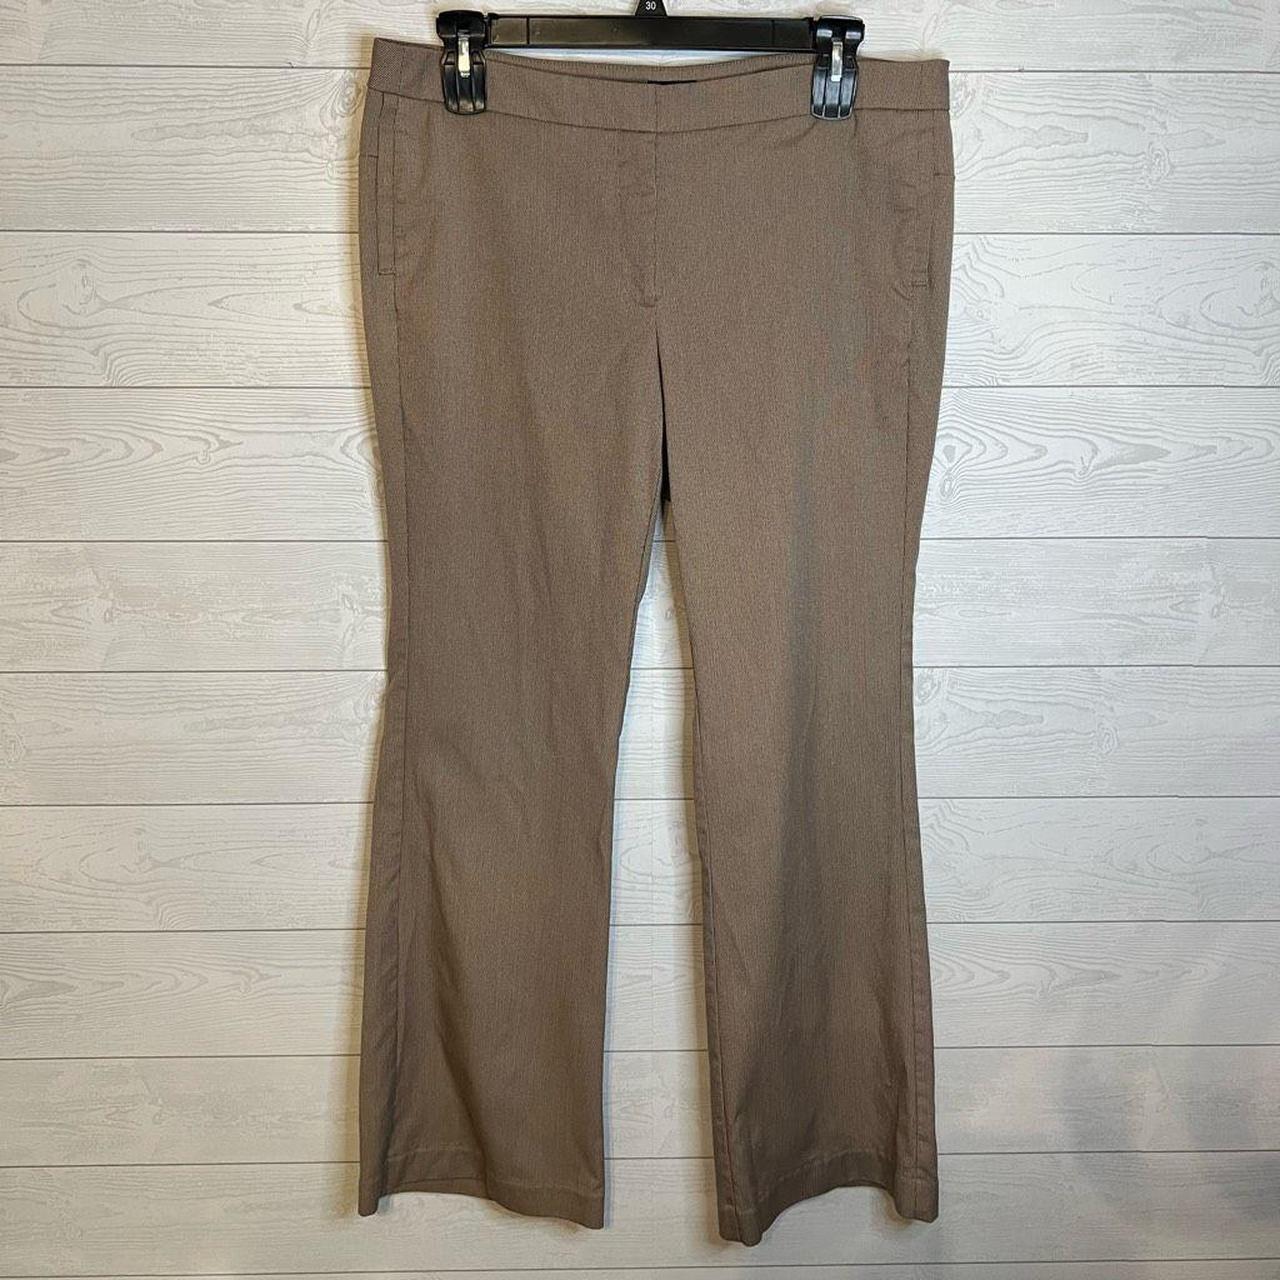 ATOIR X LARA WORTHINGTON - 002 Trouser (Spearmint)